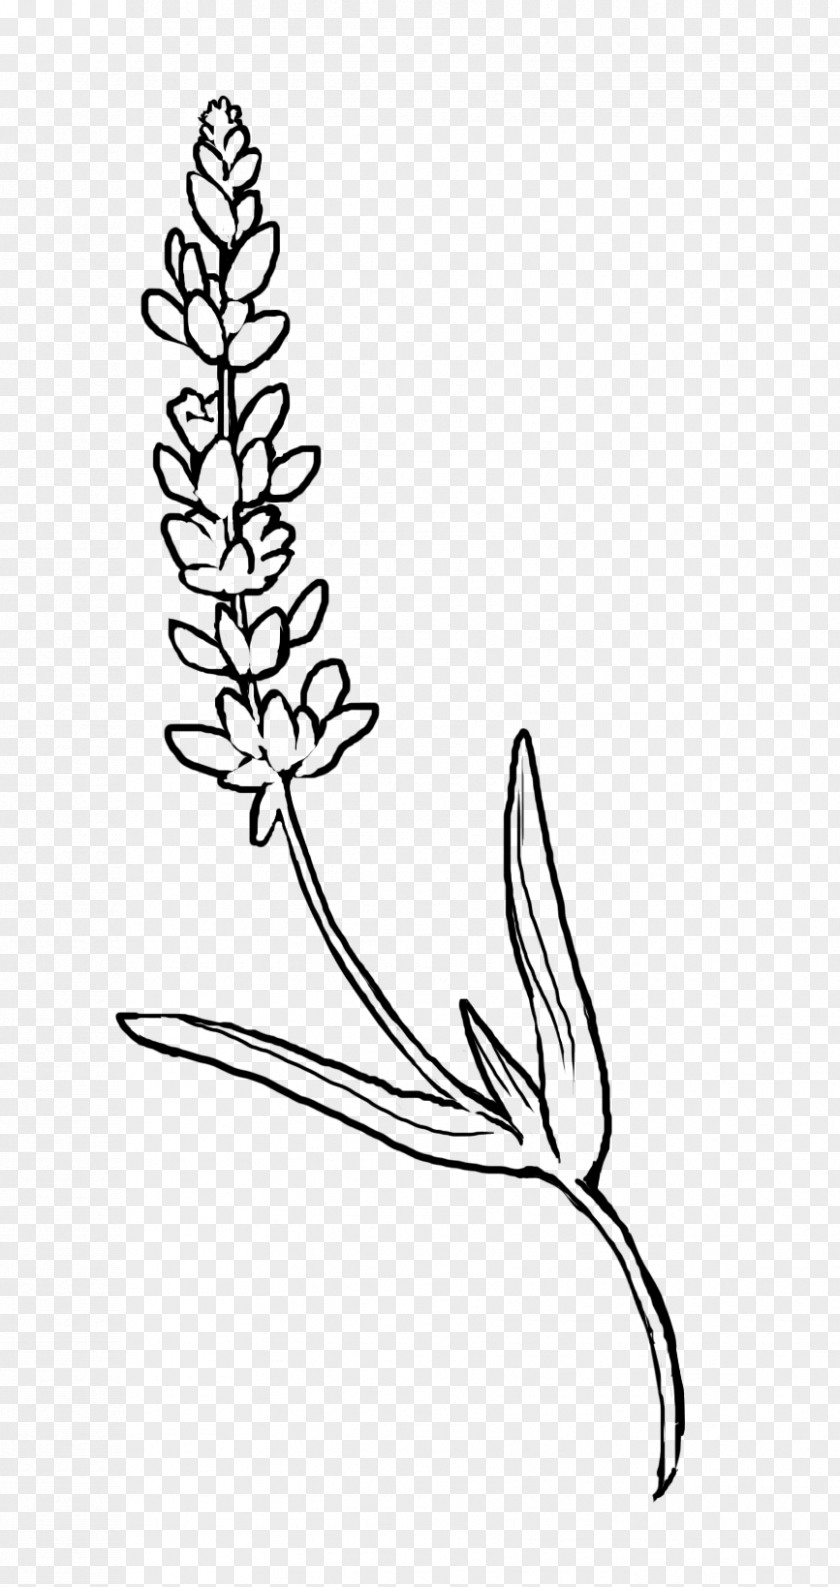 Ottawa Geegees Plant Stem Naver Blog Flower Black And White Clip Art PNG